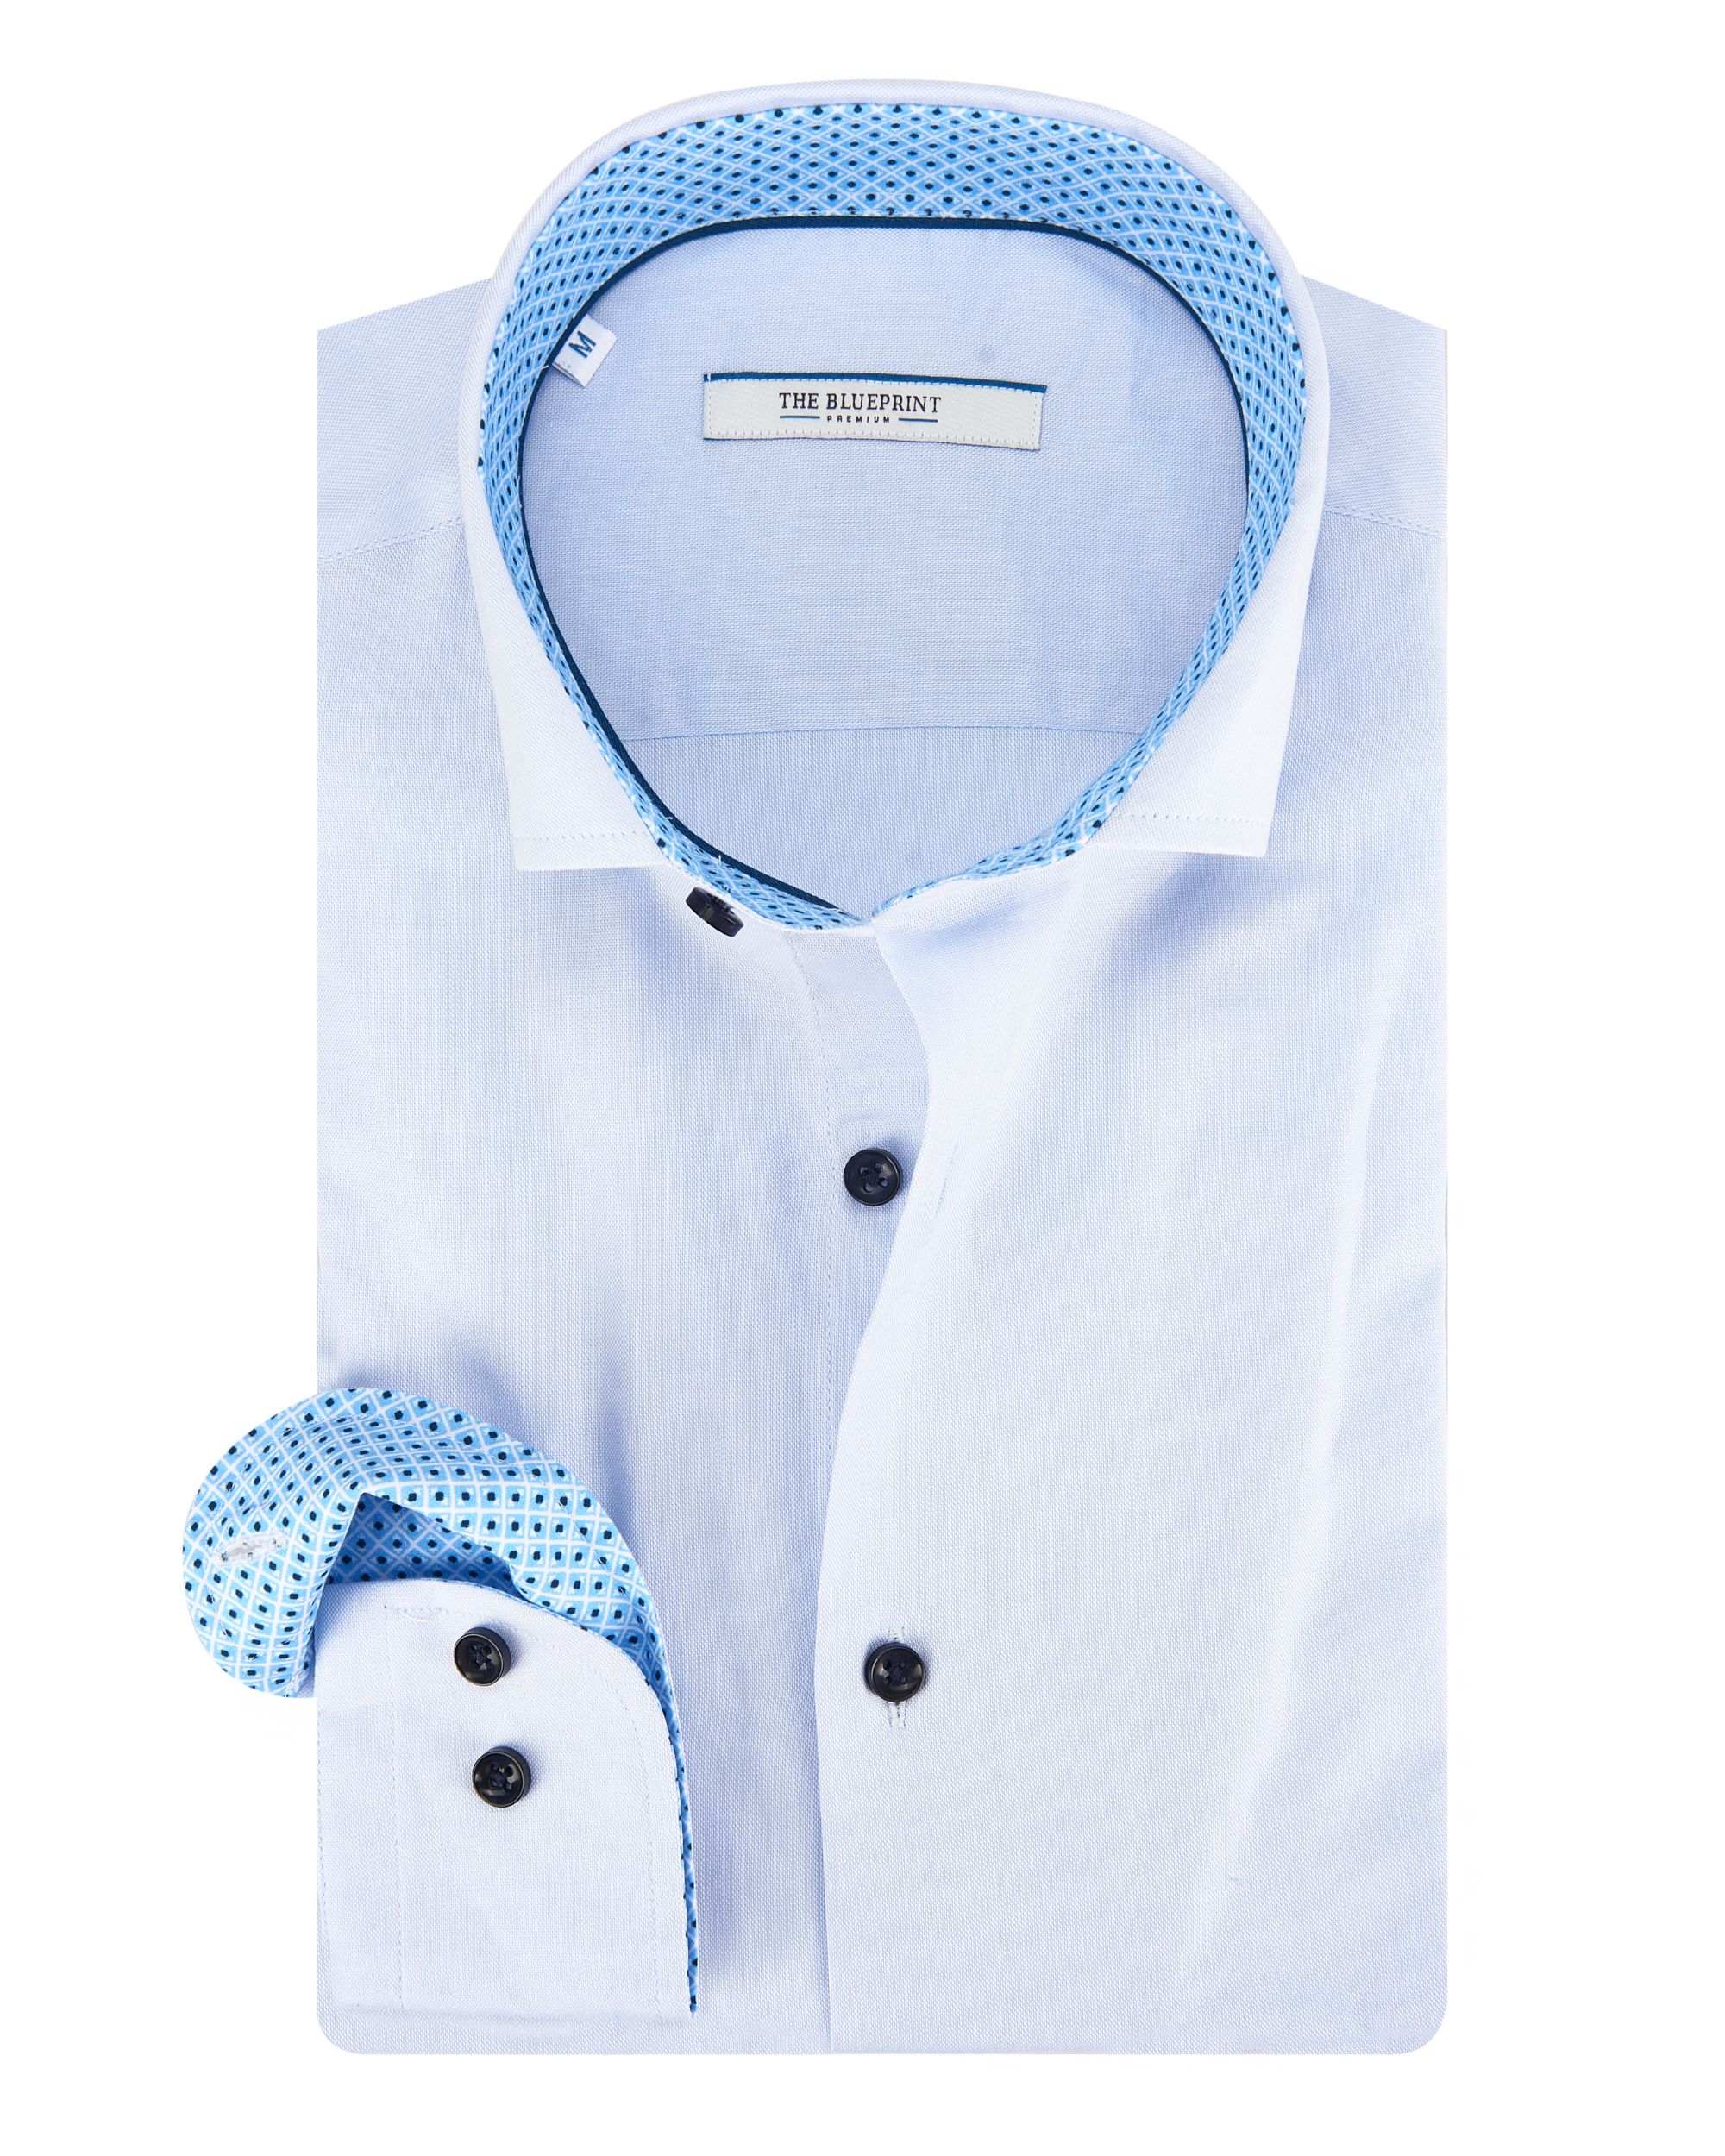 The BLUEPRINT Premium Trendy overhemd LM L.BLUE 084490-001-L